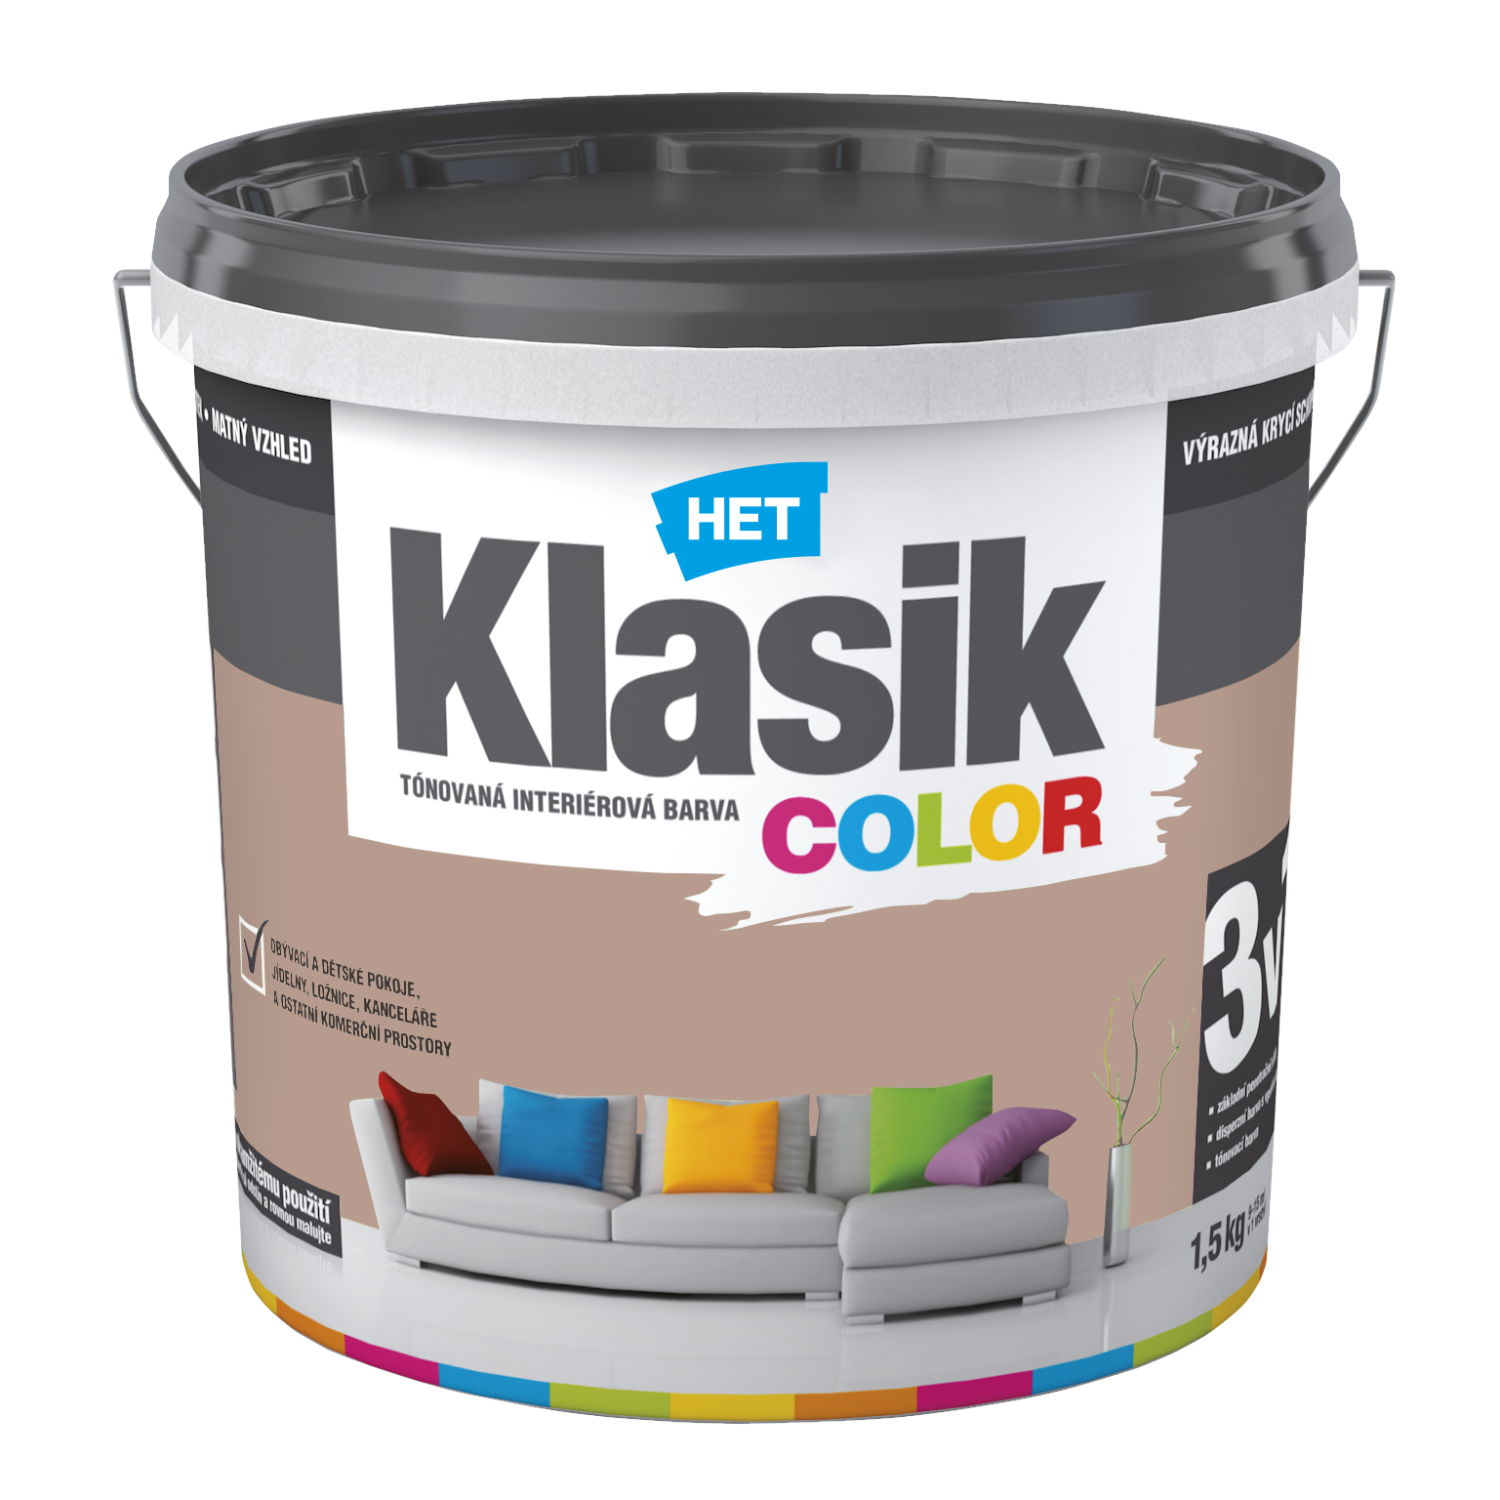 HET Klasik COLOR tónovaná interiérová akrylátová disperzná oteruvzdorná farba 1,5 kg, KC0257 - hnedý orechový